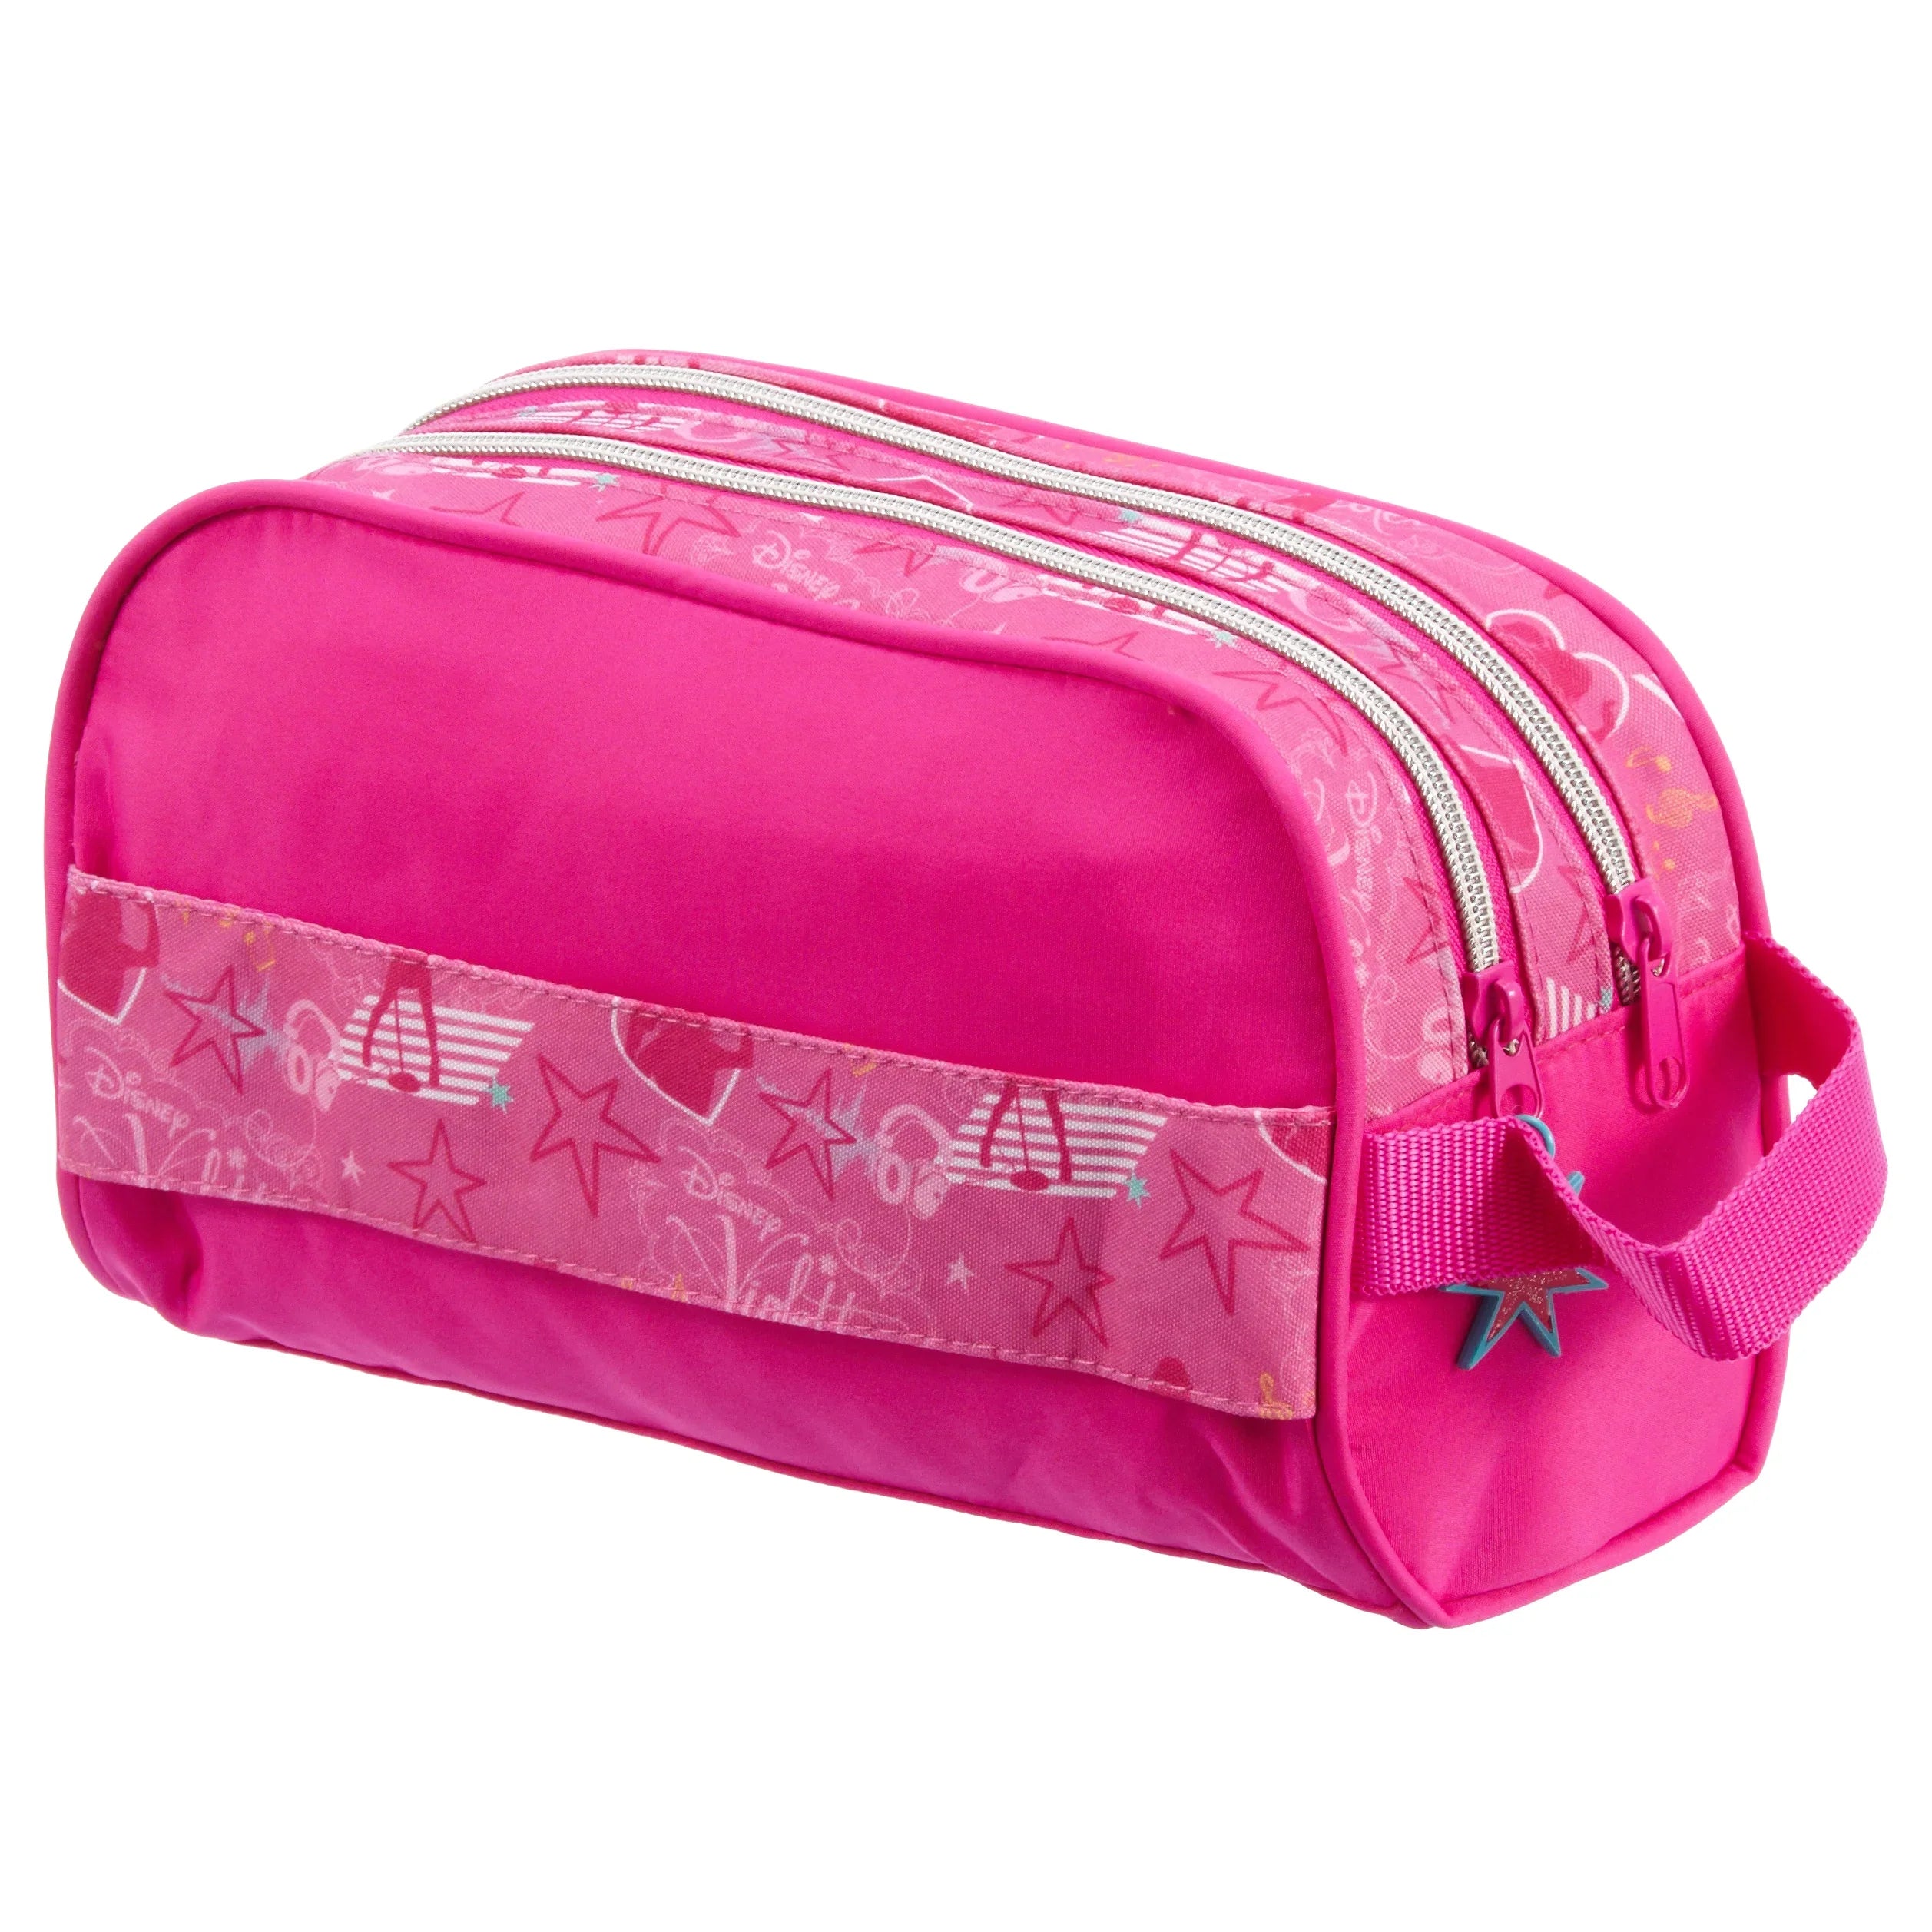 Disney Violetta Star Beauty Case 26 cm - pink